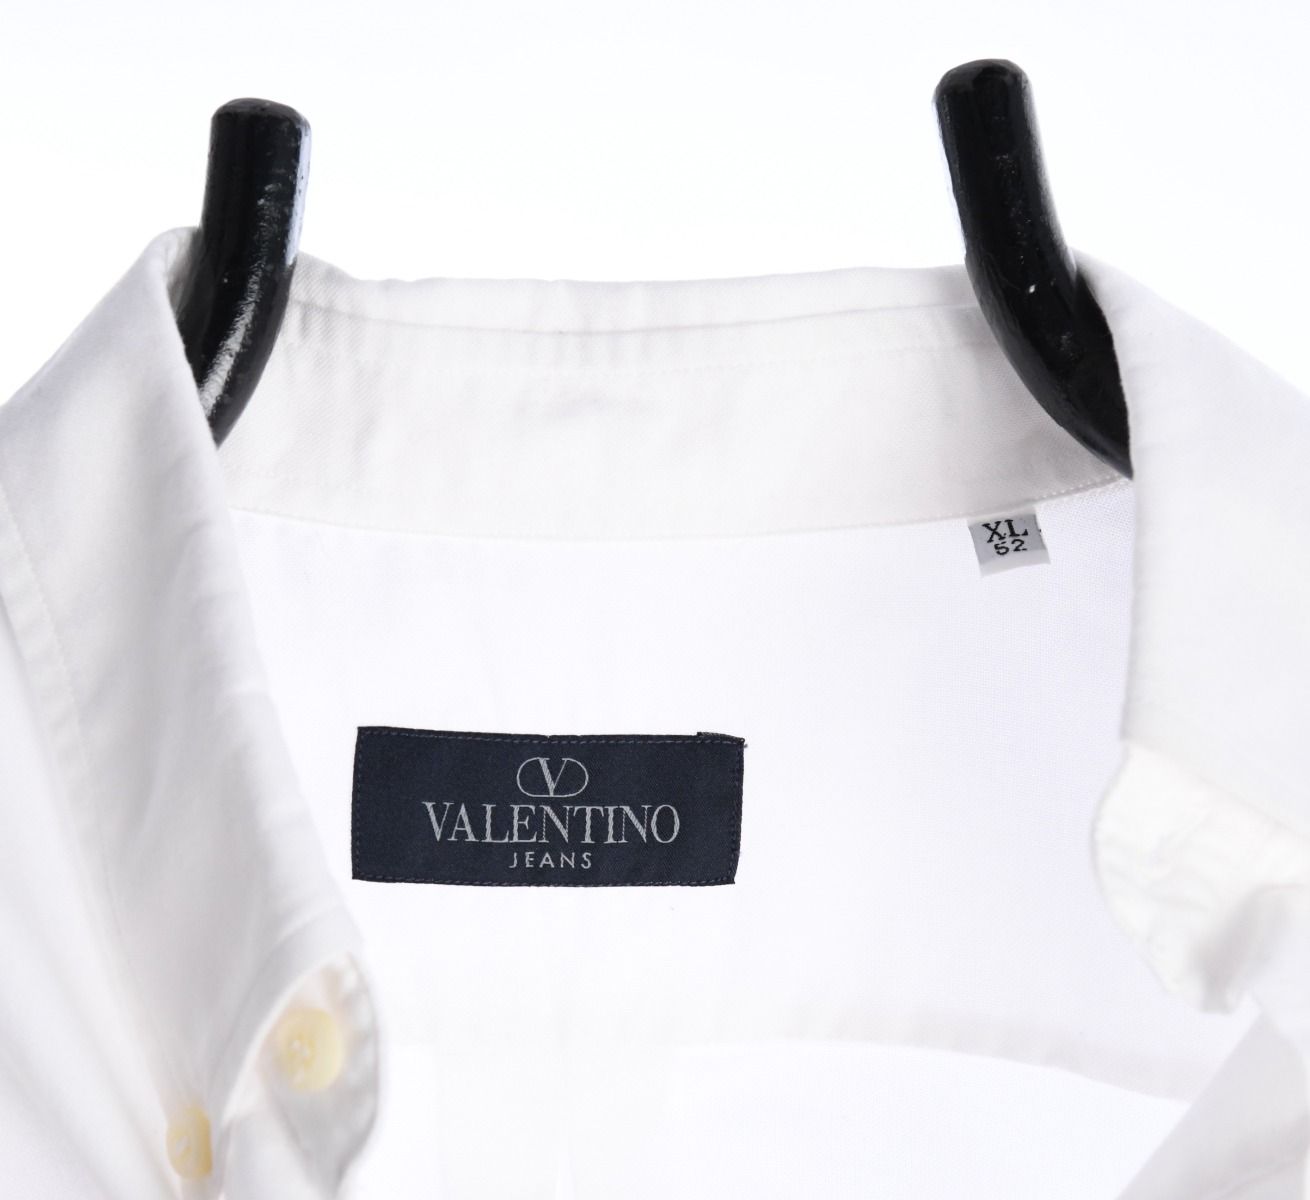 Valentino Jeans Shirt